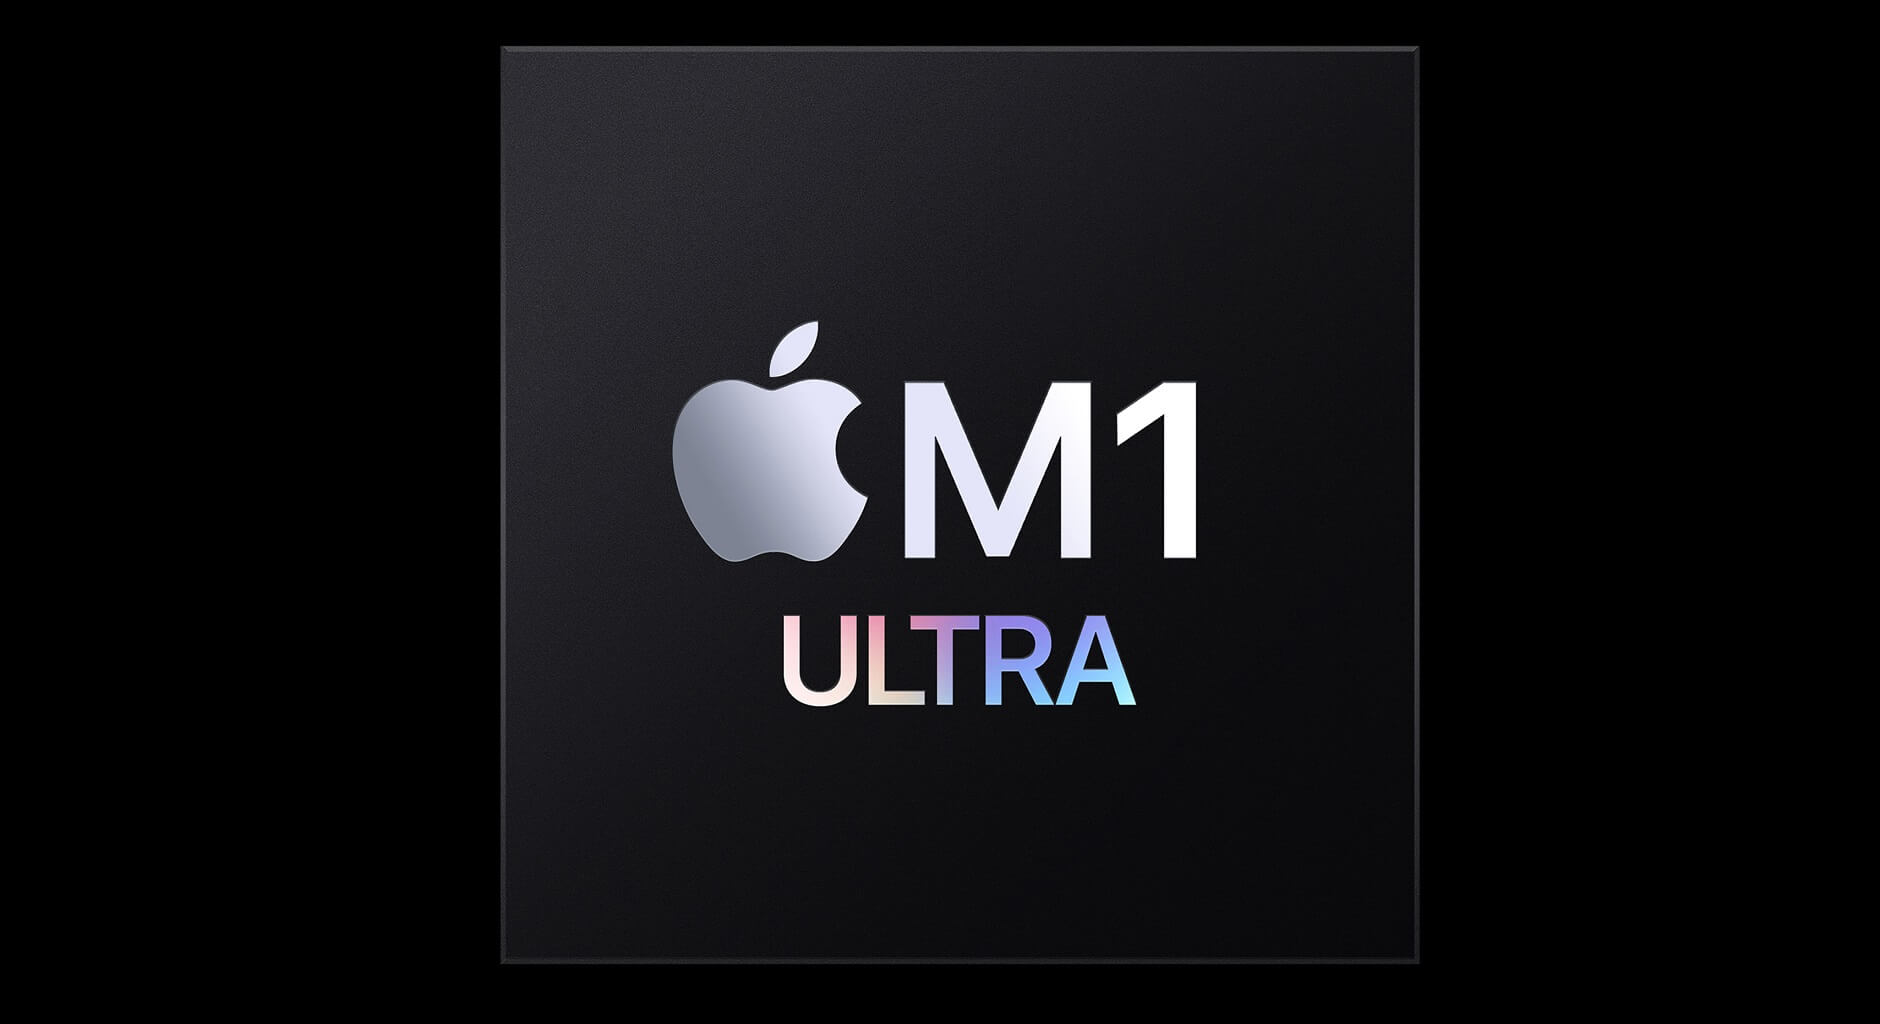 Apple M1 ultra Chip launch